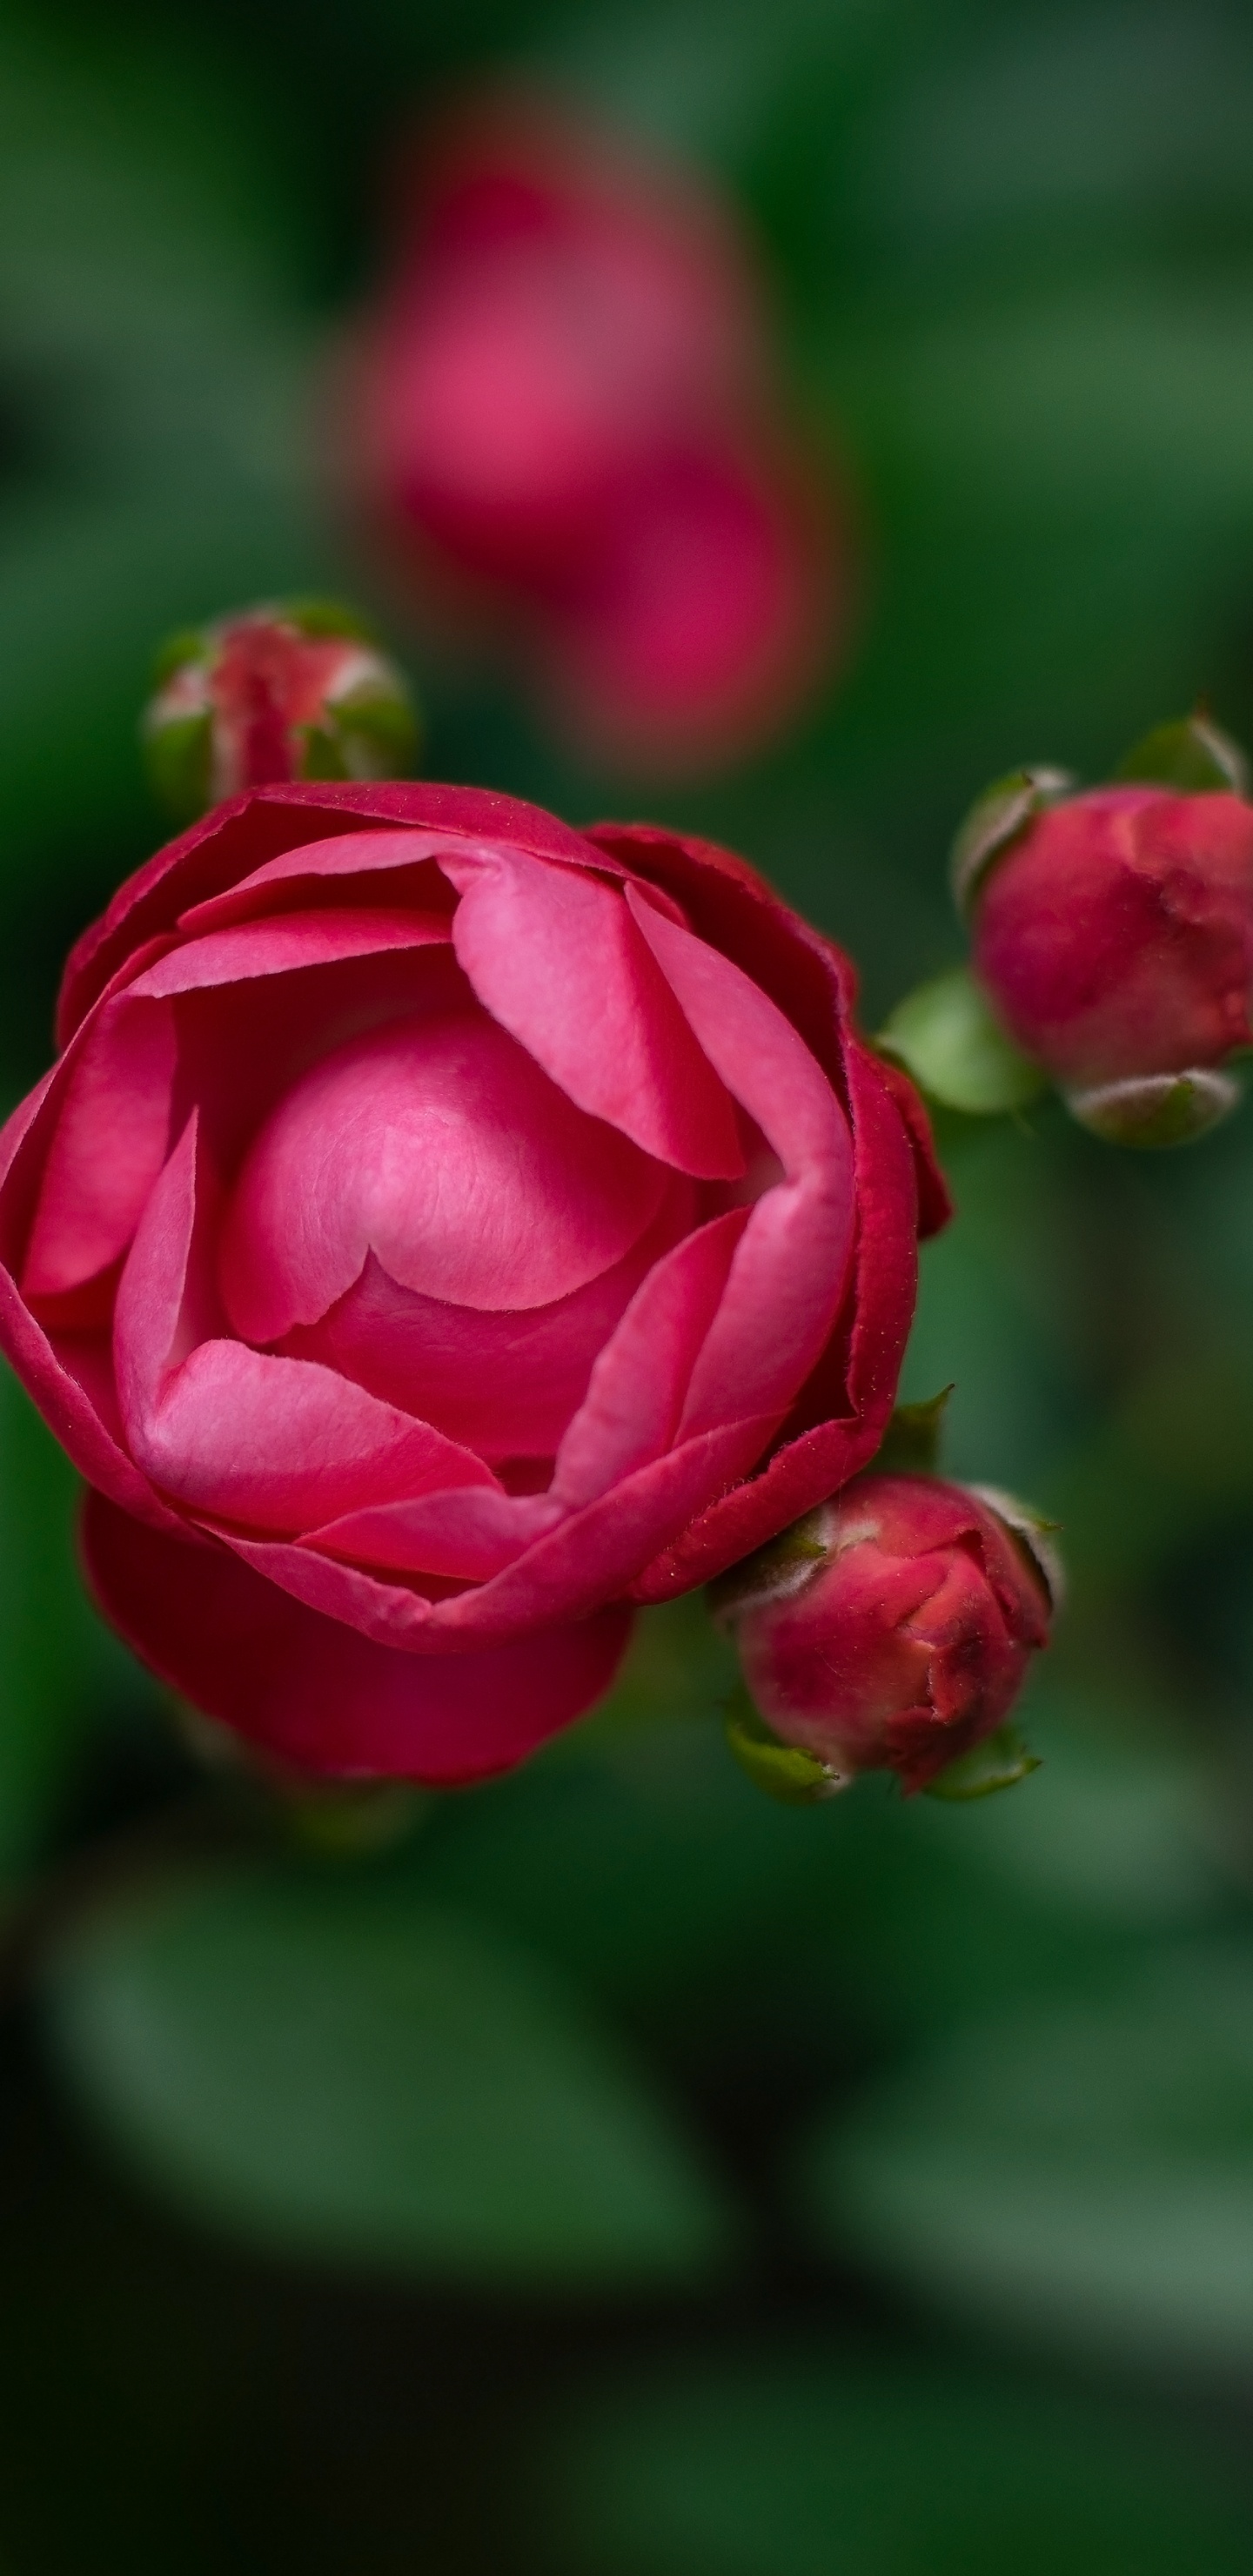 Rose Rose en Fleurs Pendant la Journée. Wallpaper in 1440x2960 Resolution